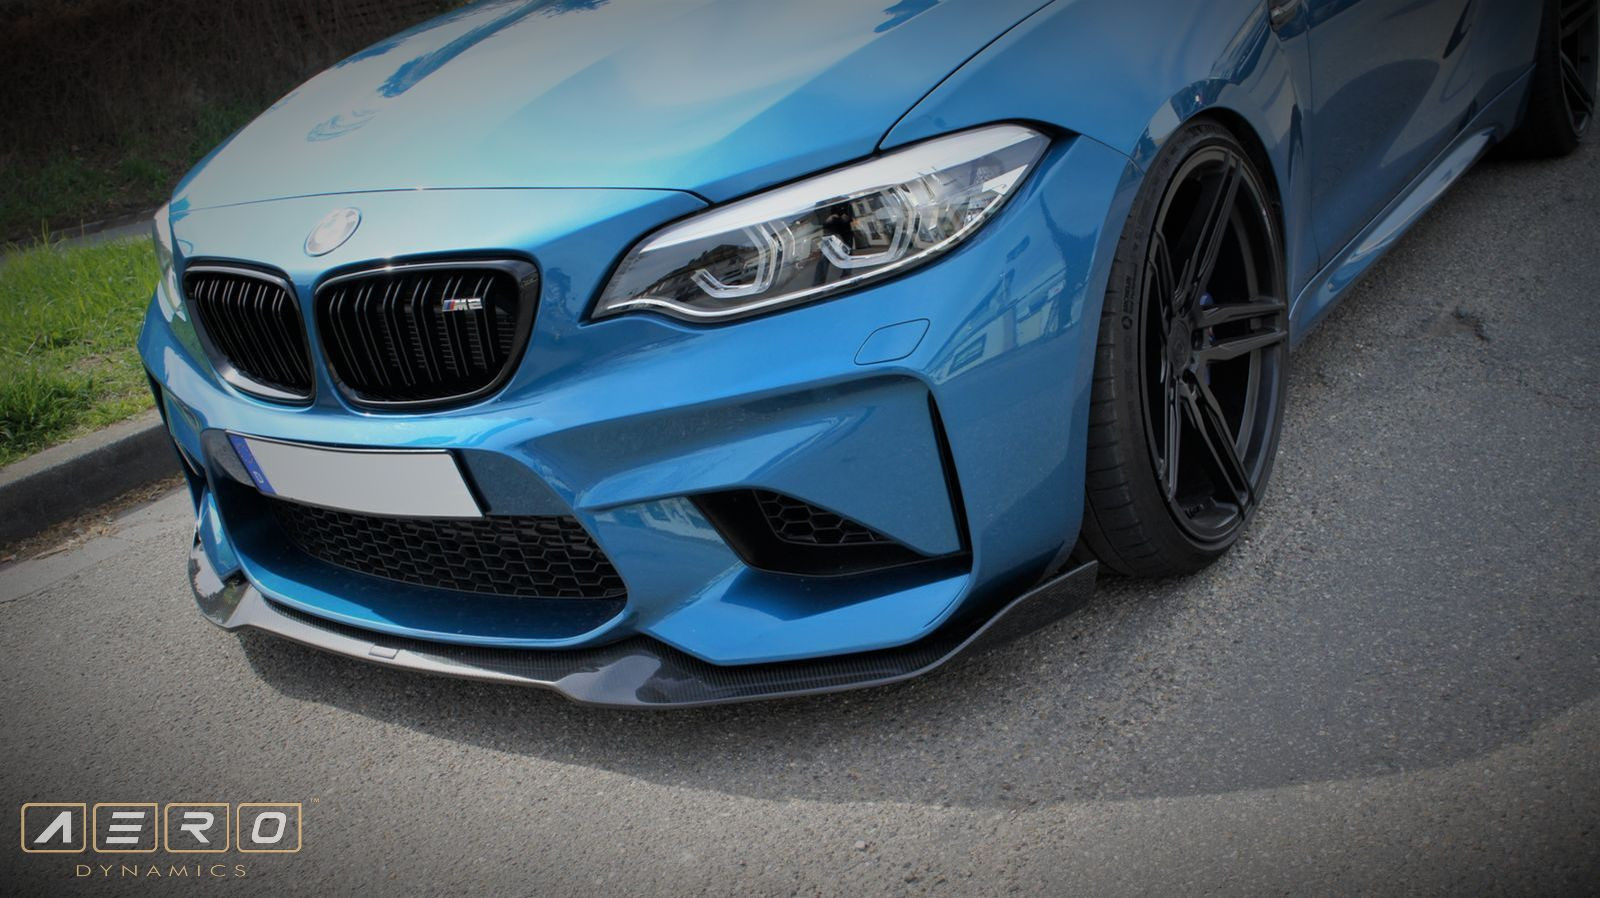 Auto Frontspoiler Frontlippe Spoiler für BMW F87 M2 2019-2021, Auto  Frontschürze Lippe Spoiler ABS Frontstoßstange Splitter Diffusor Flügel  Lippen